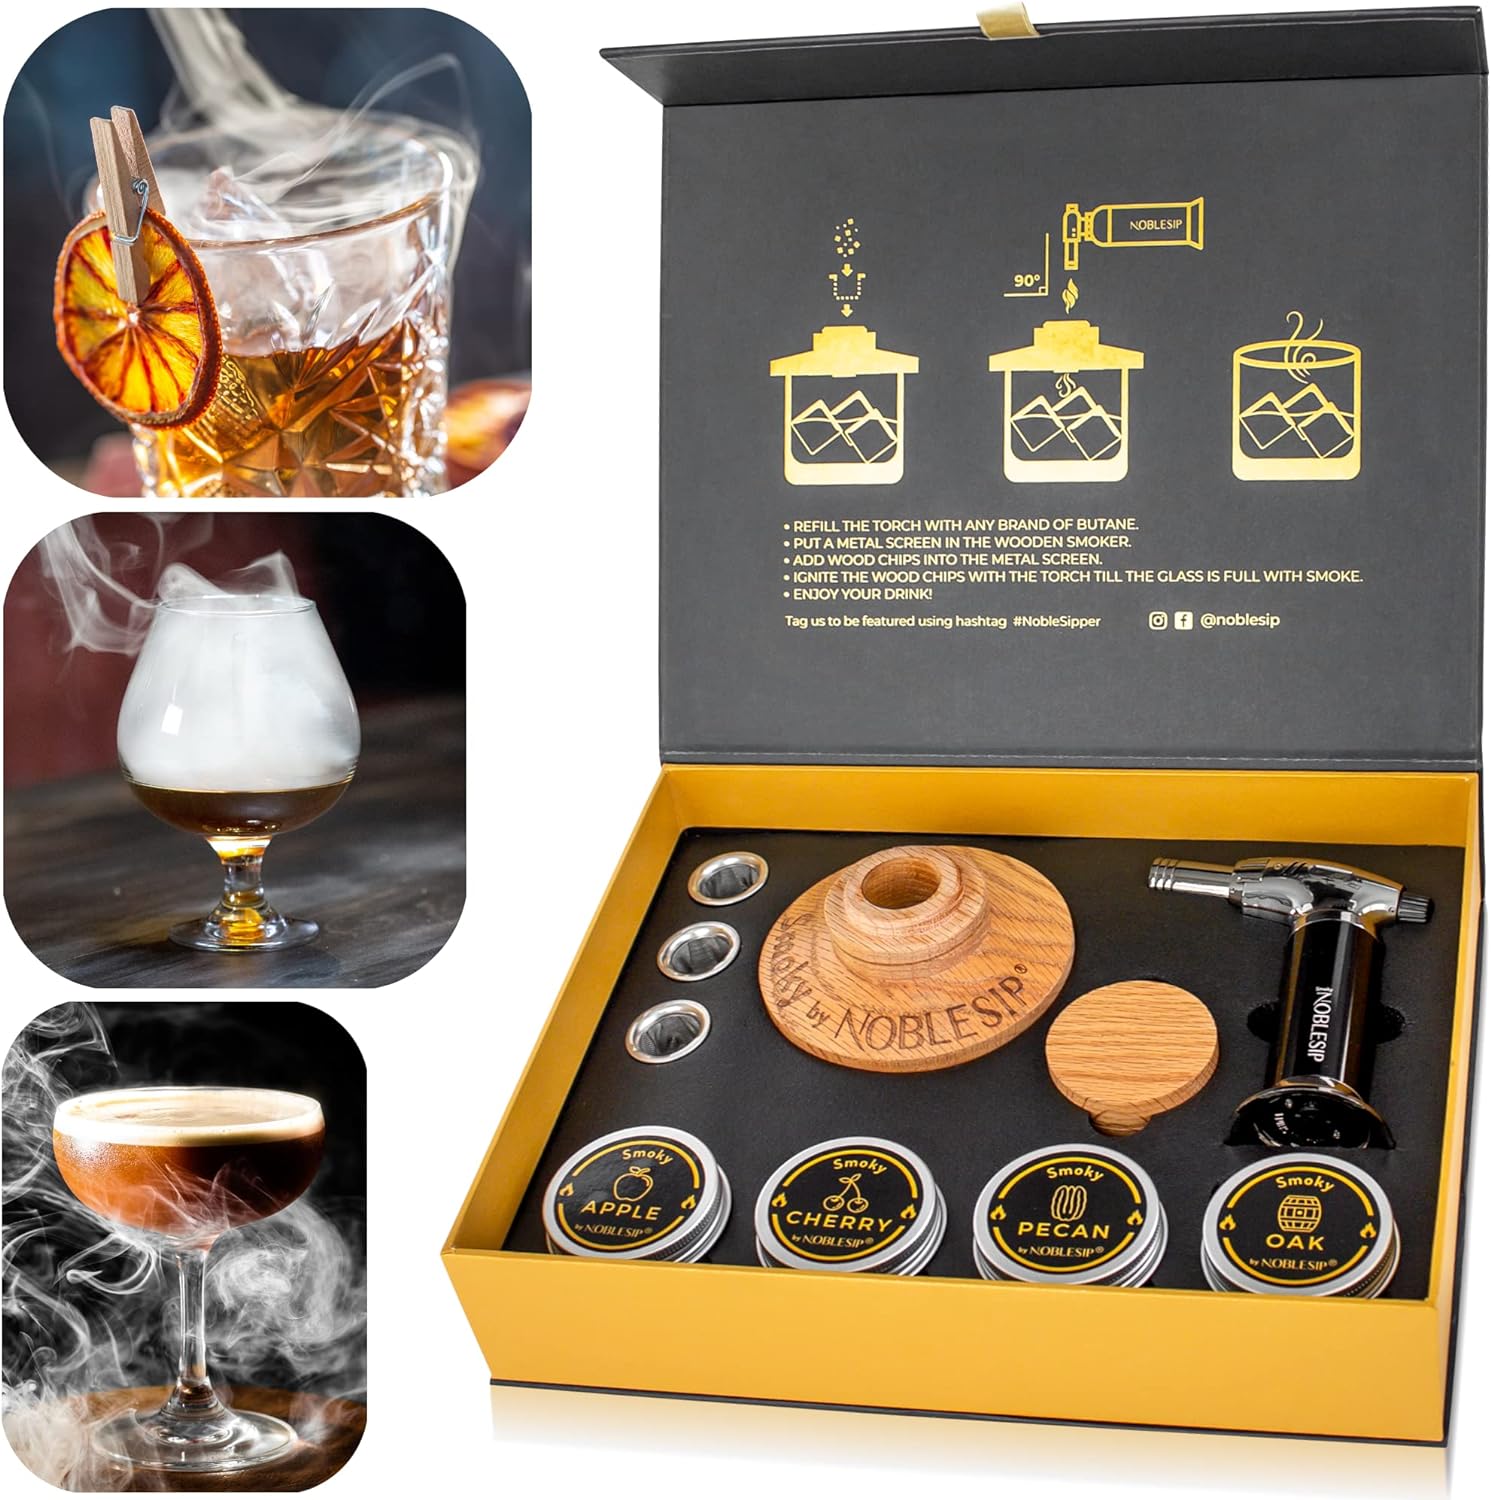 NobleSip Whiskey Smoker Kit